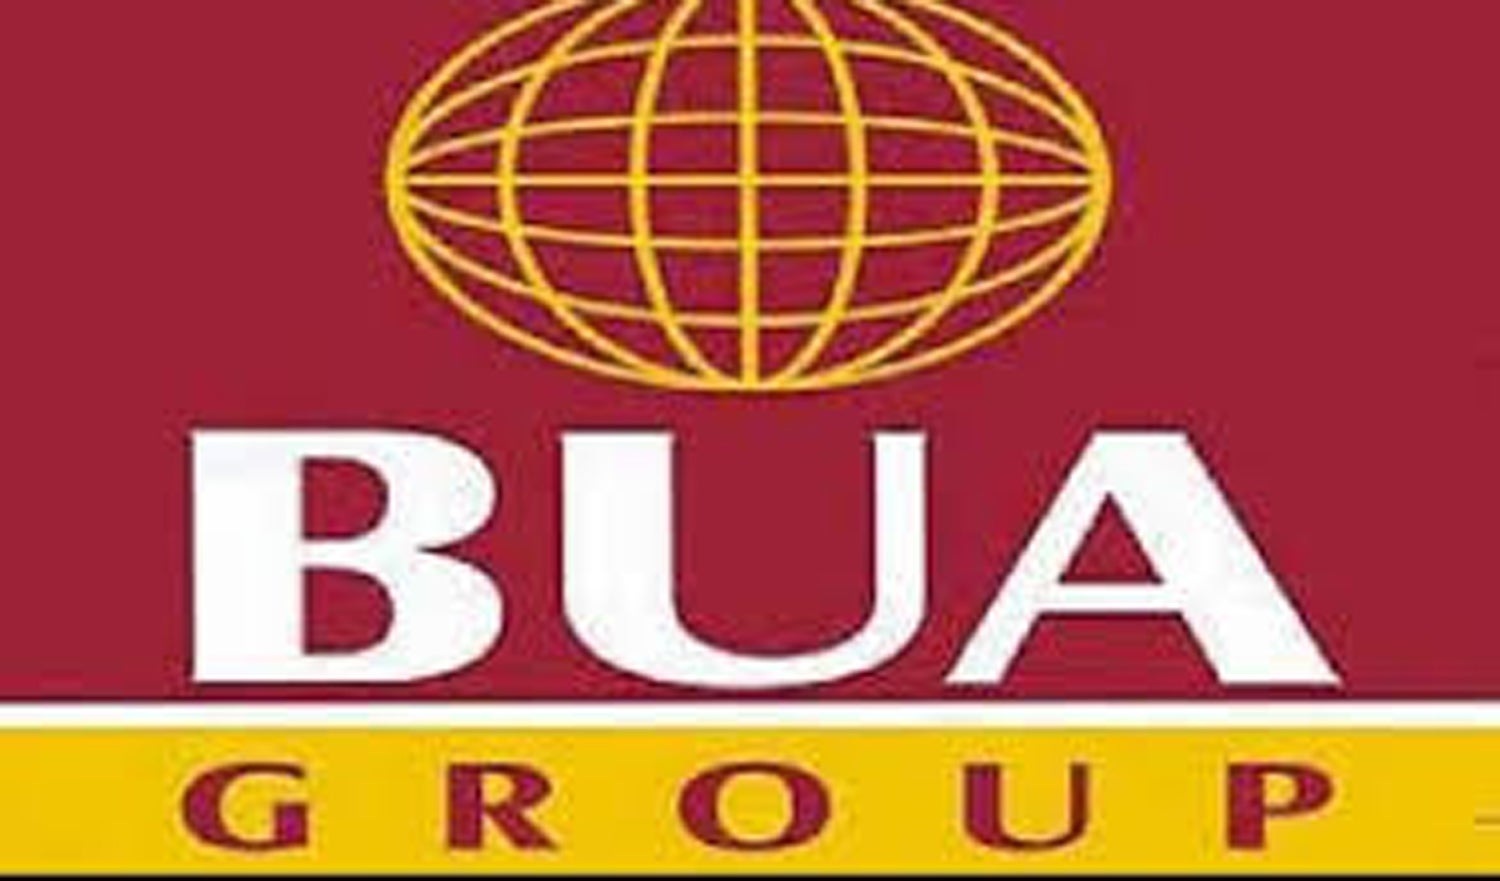 BUA Cement set to establish Ultramodern 3million Cement Plant, 50mw Power Plant in Adamawa